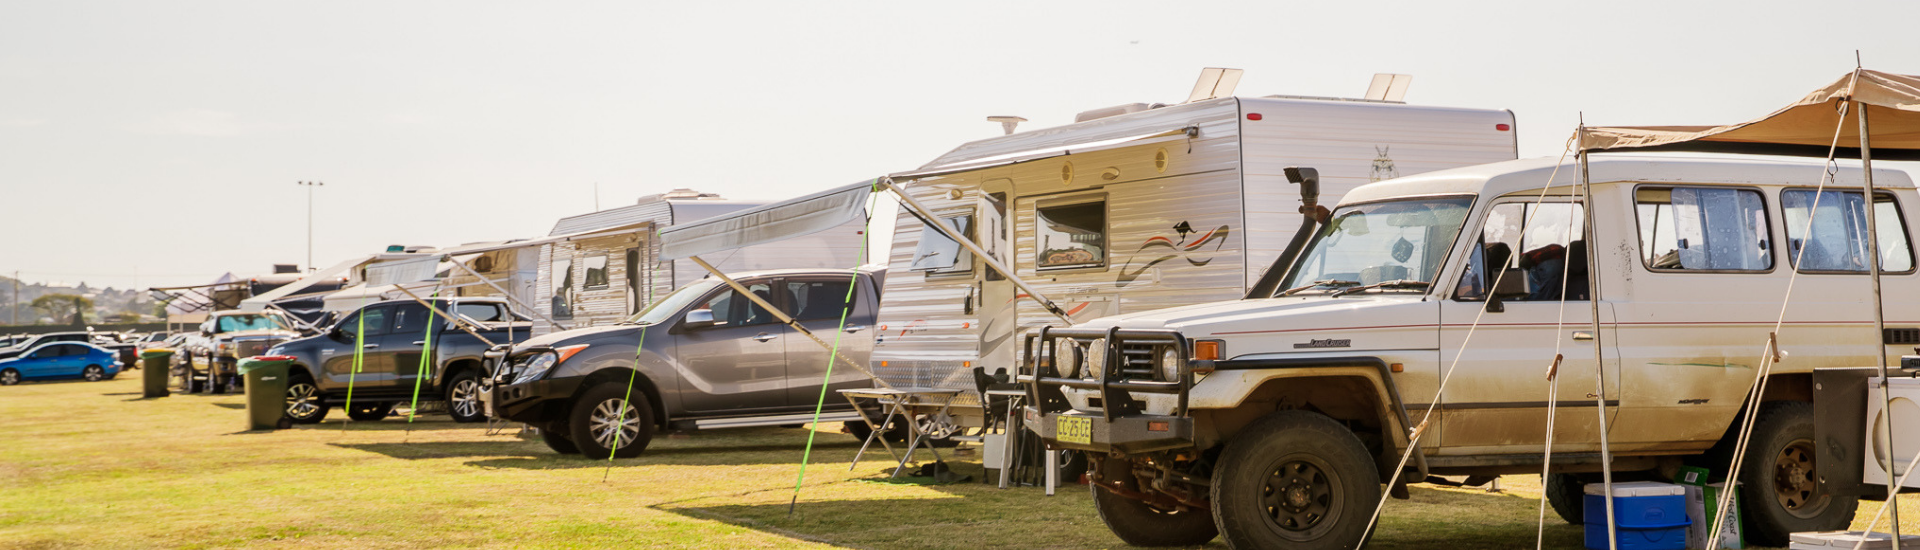 Infield Camping | Brisbane Racing Club